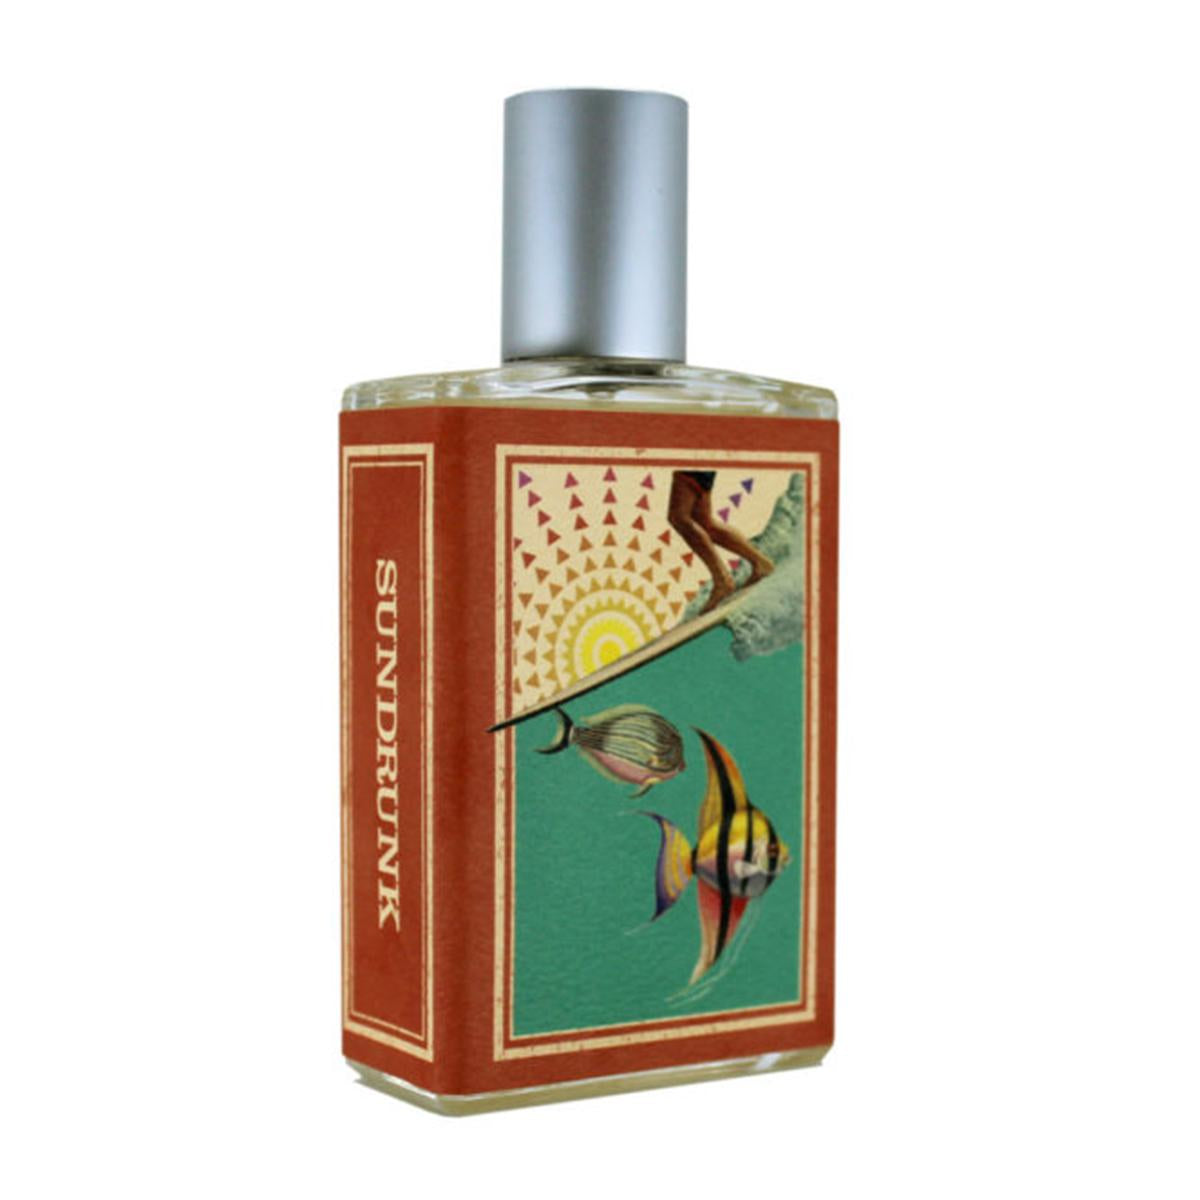 Primary image of Sundrunk Eau de Parfum